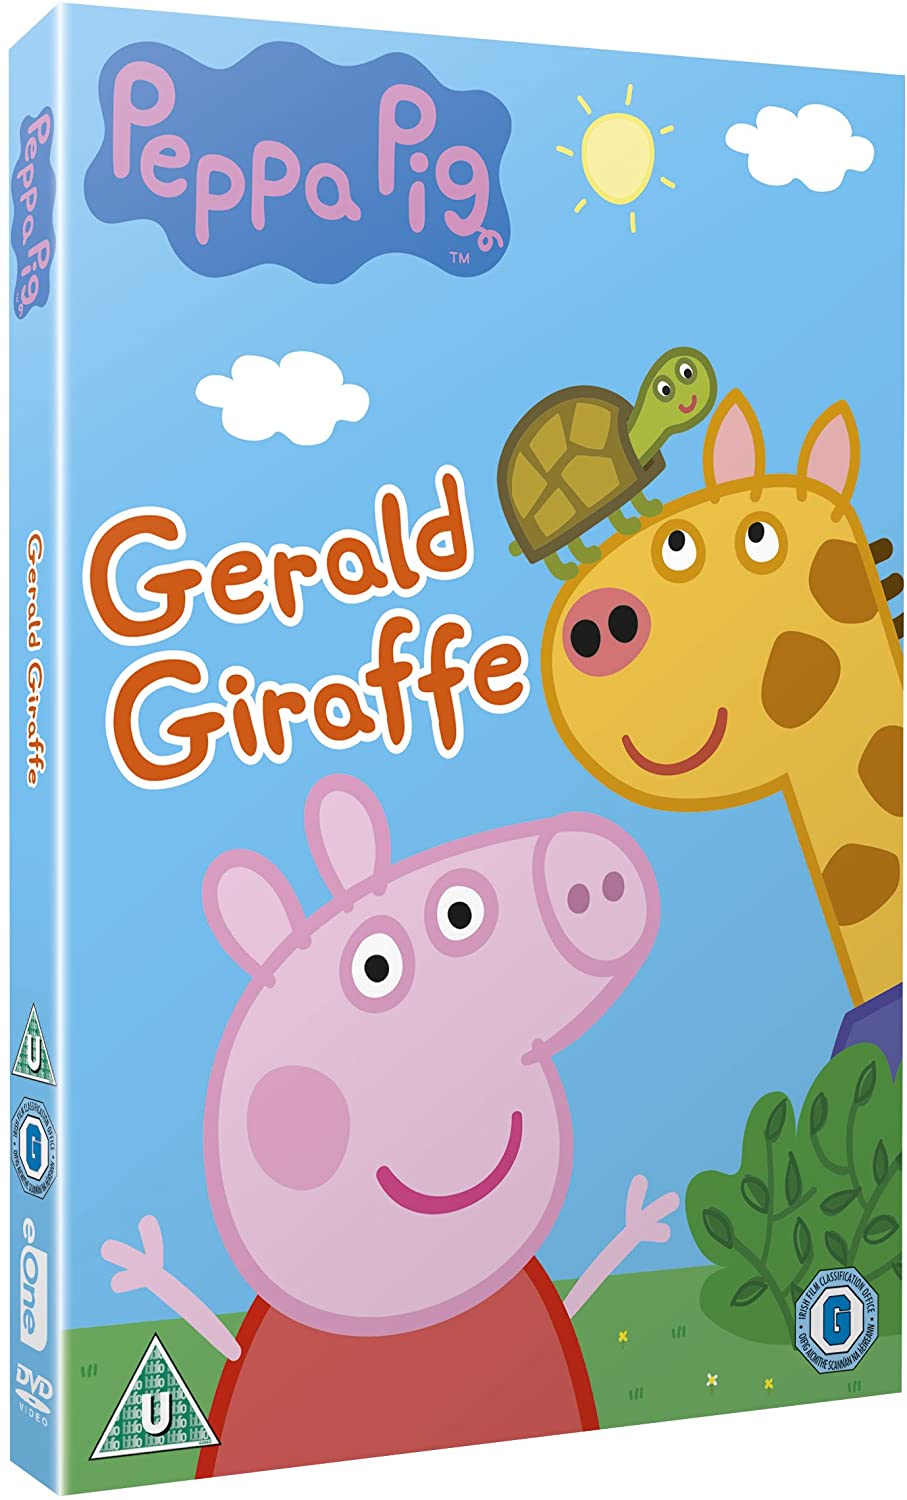 Peppa Pig : Gerald Girafe [DVD]